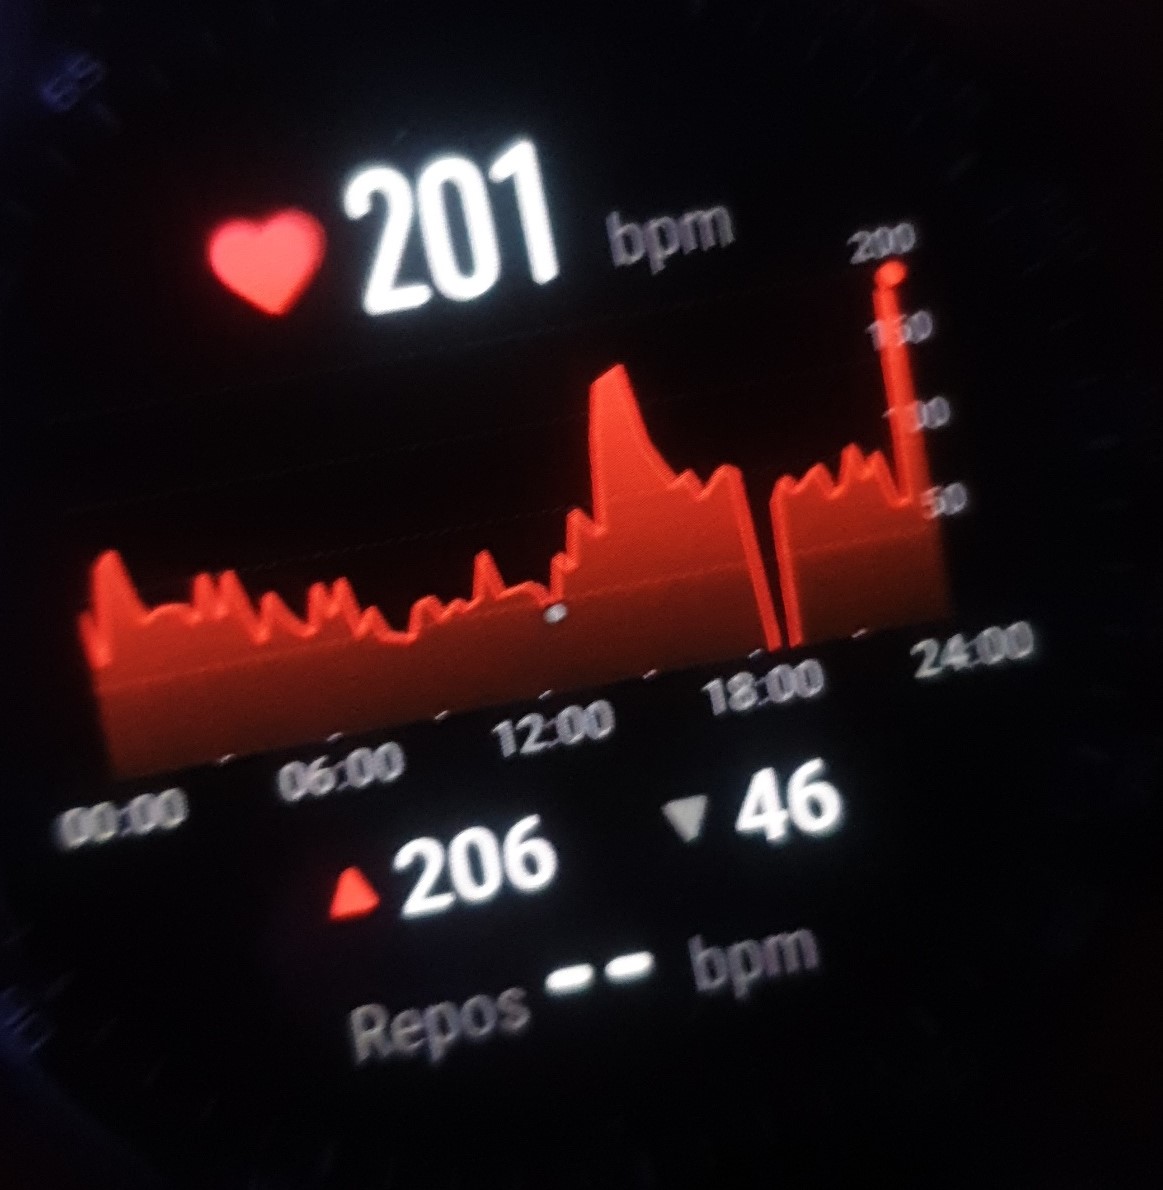 inaccurate heart rate sensor